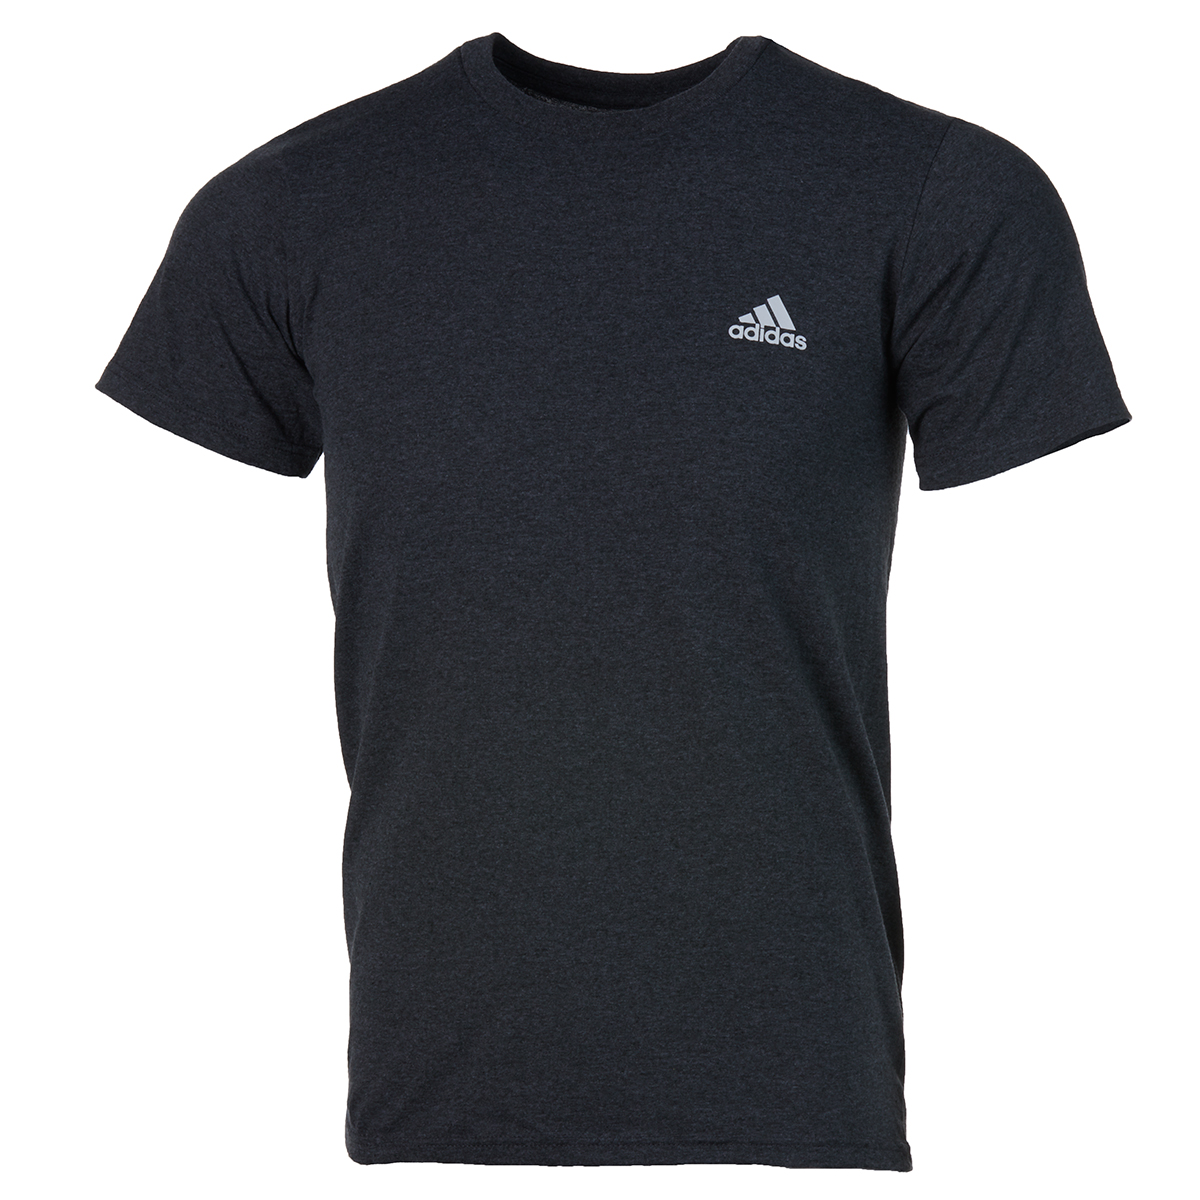 Adidas Men's Go To Short-Sleeve Tee - Black, XL